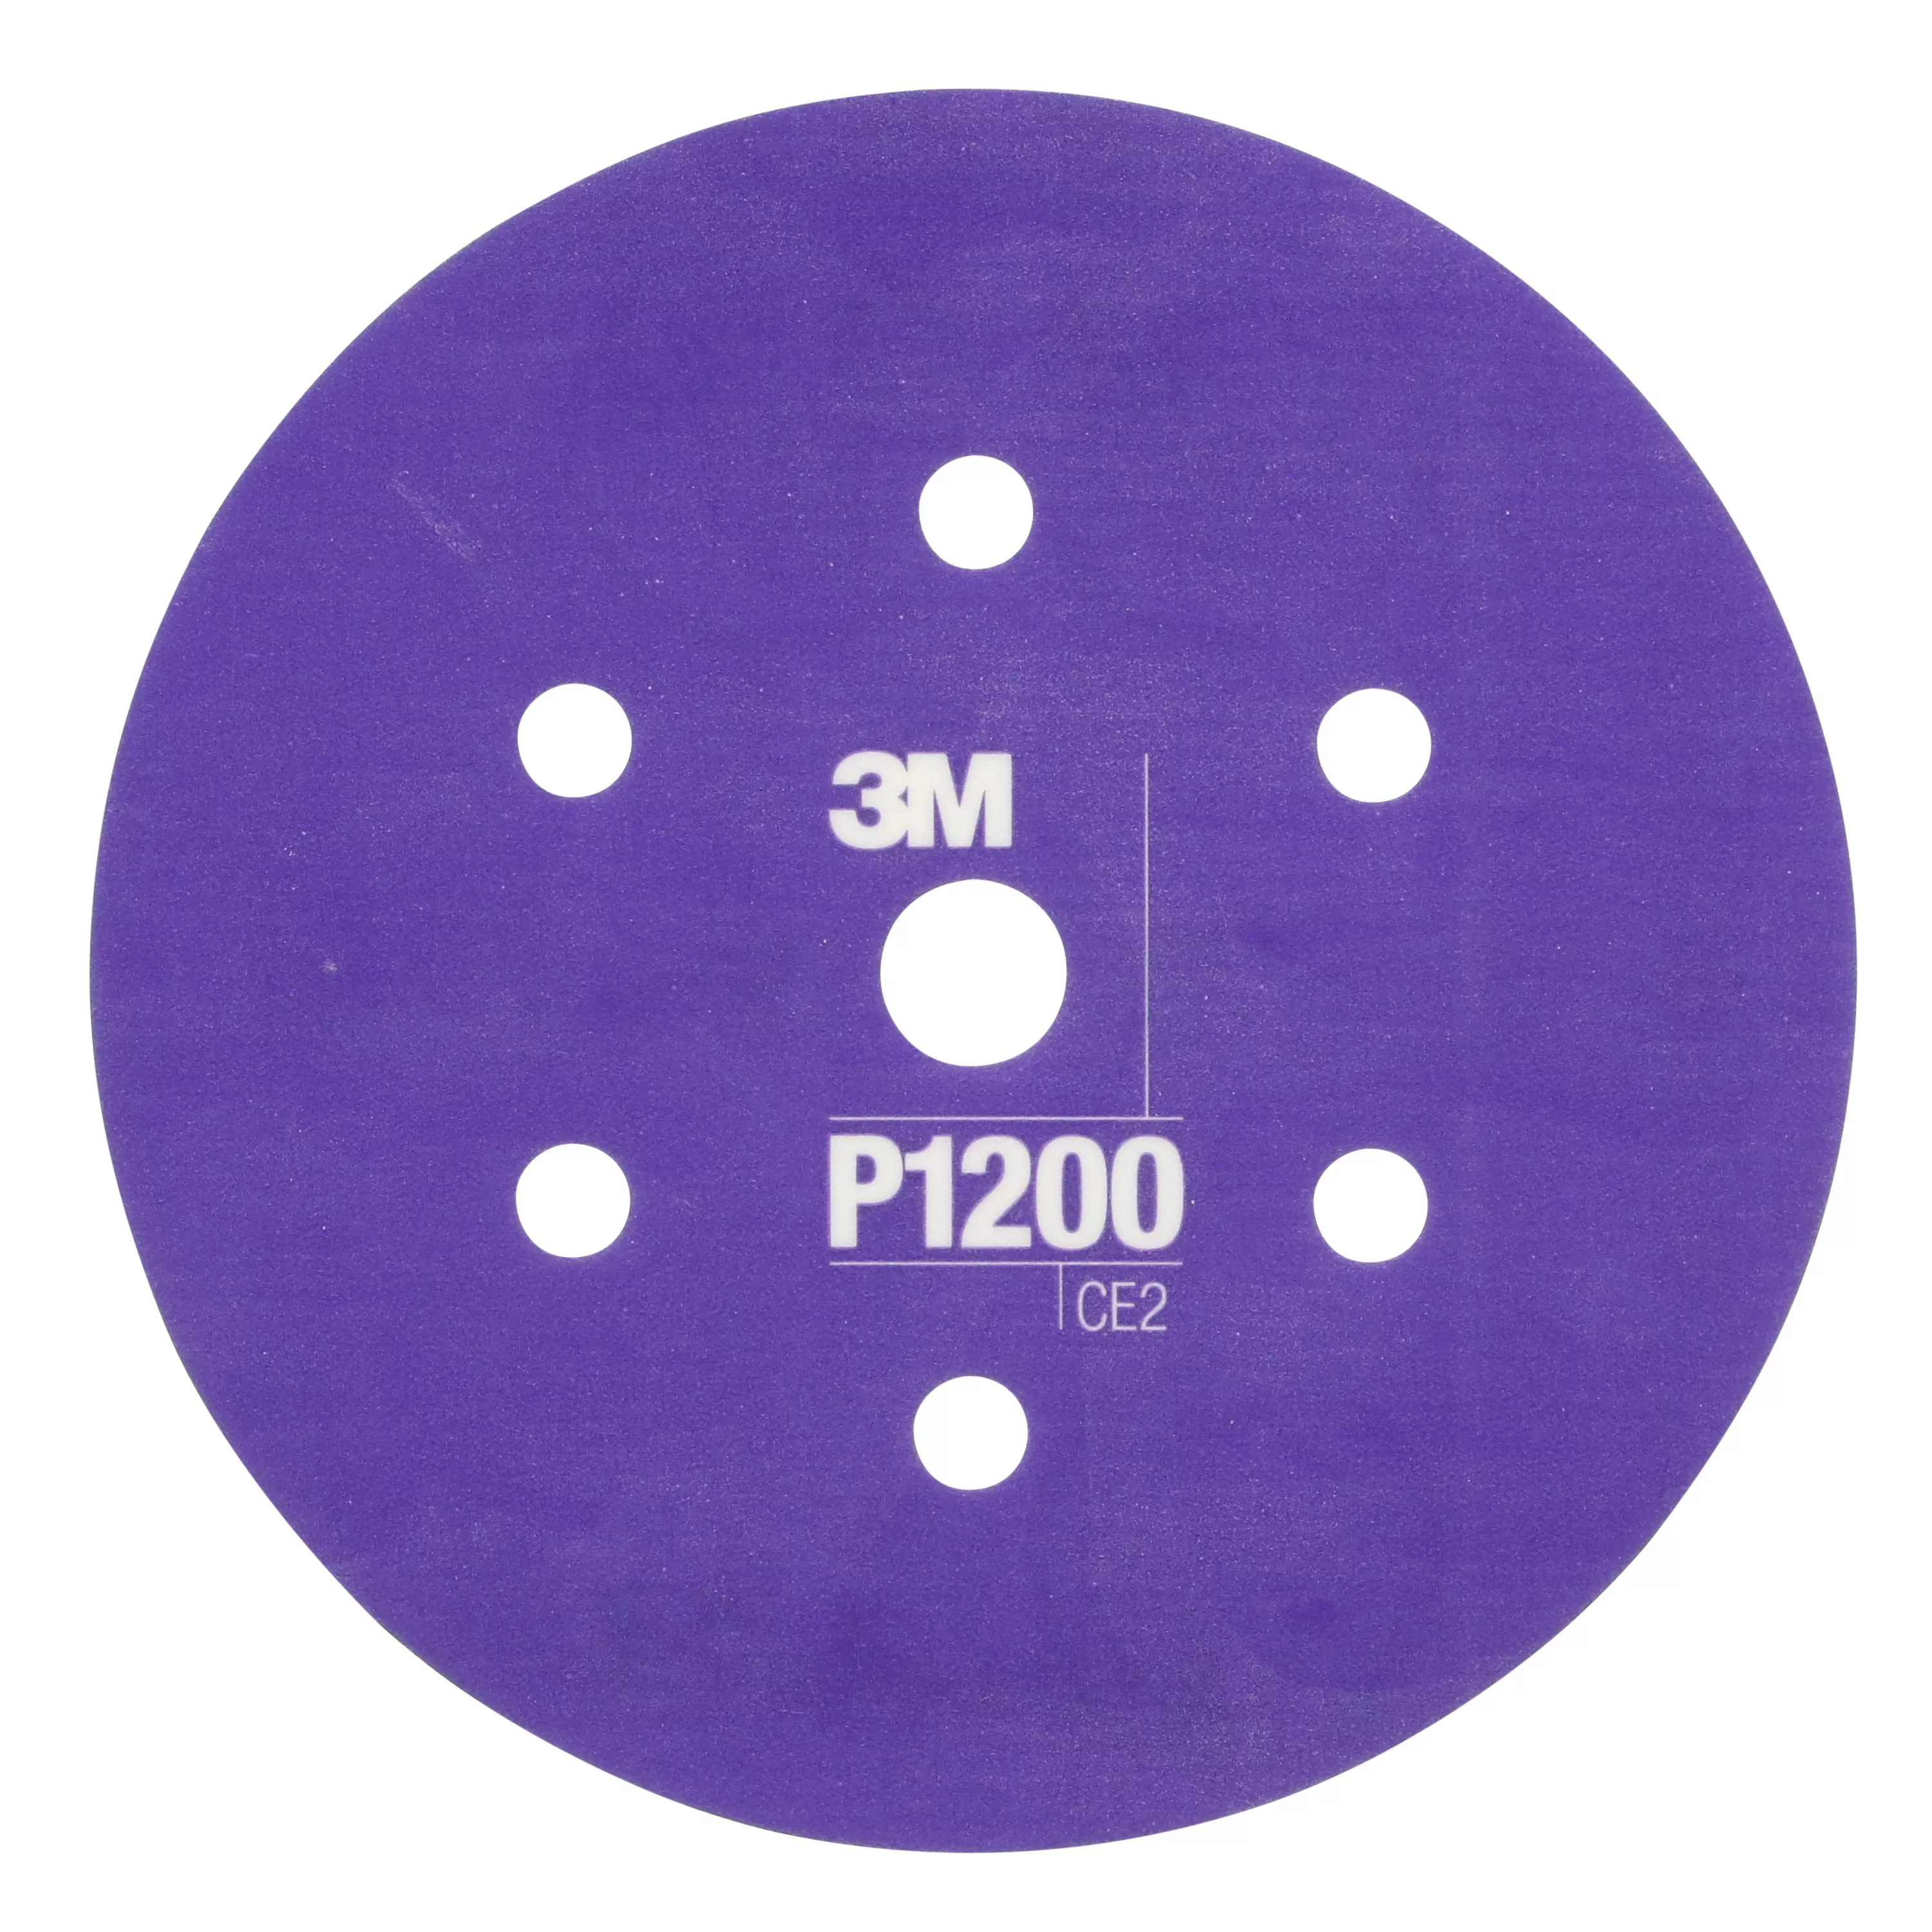 3M™ Hookit™ Flexible Abrasive Disc 270J, 34408, 6 in, Dust Free, P1200,
25 disc per carton, 5 cartons per case